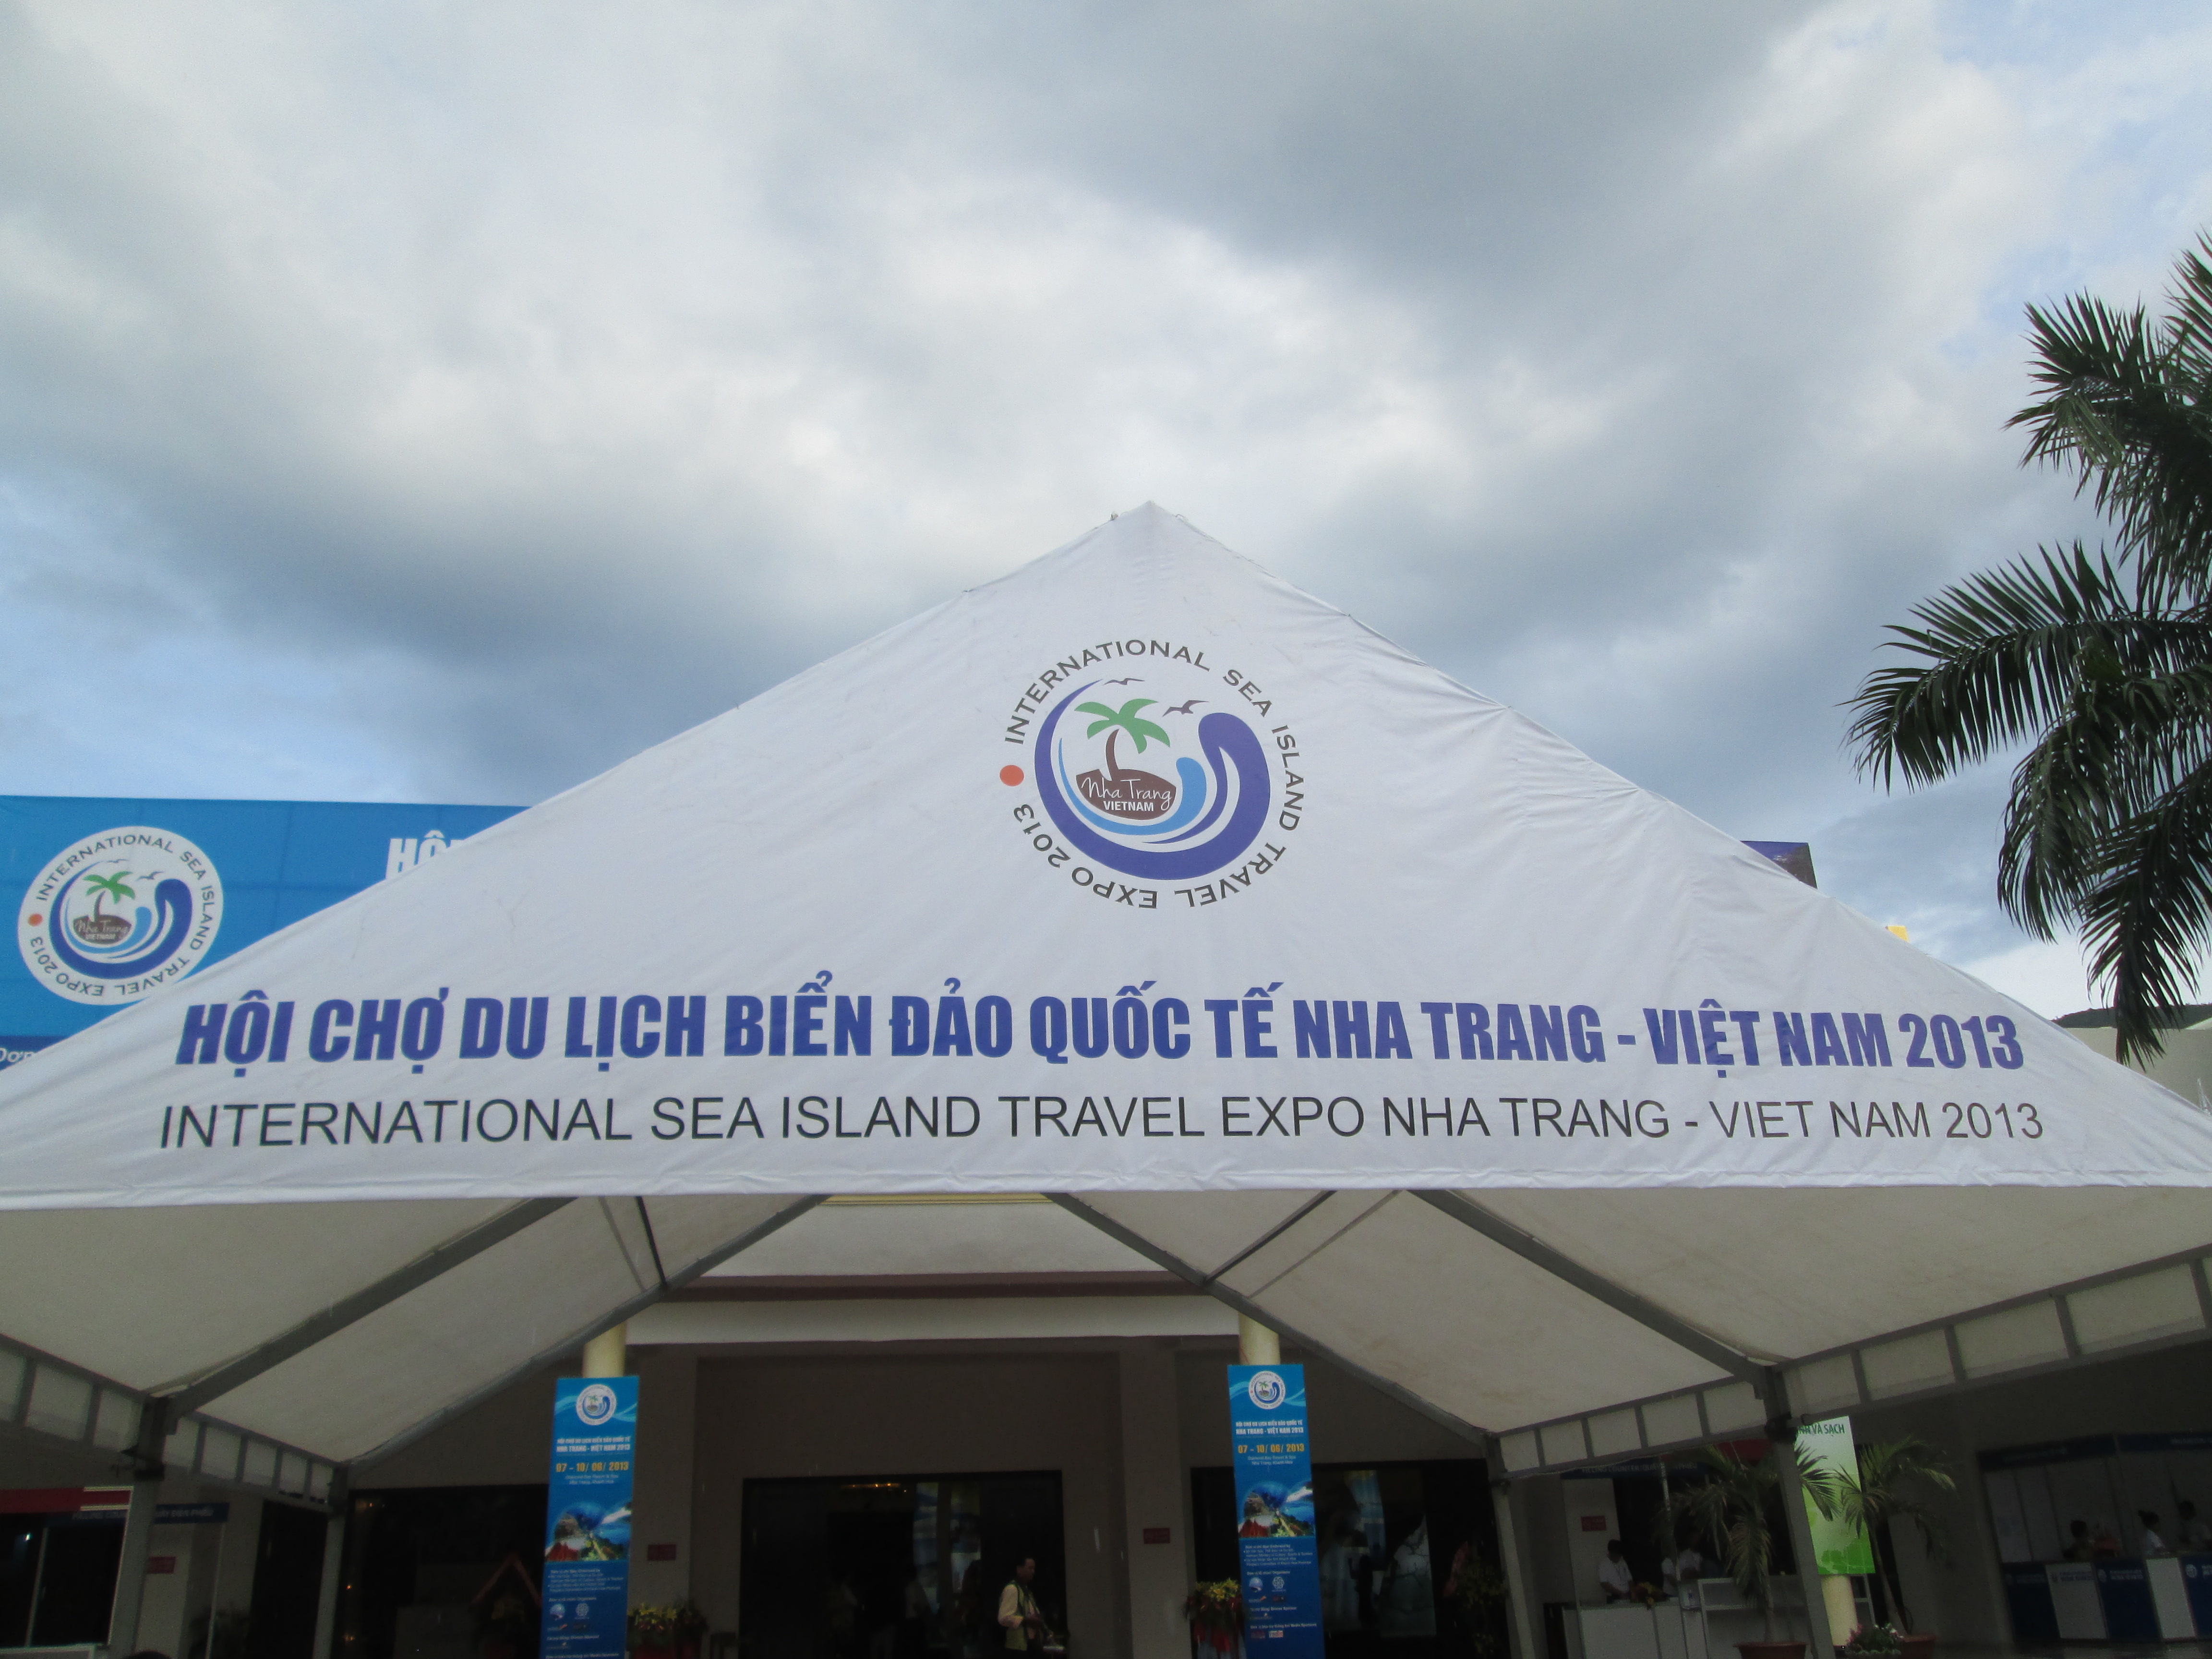 Intel Sea Island Travel Expo Nha Trang - Vietnam 2013